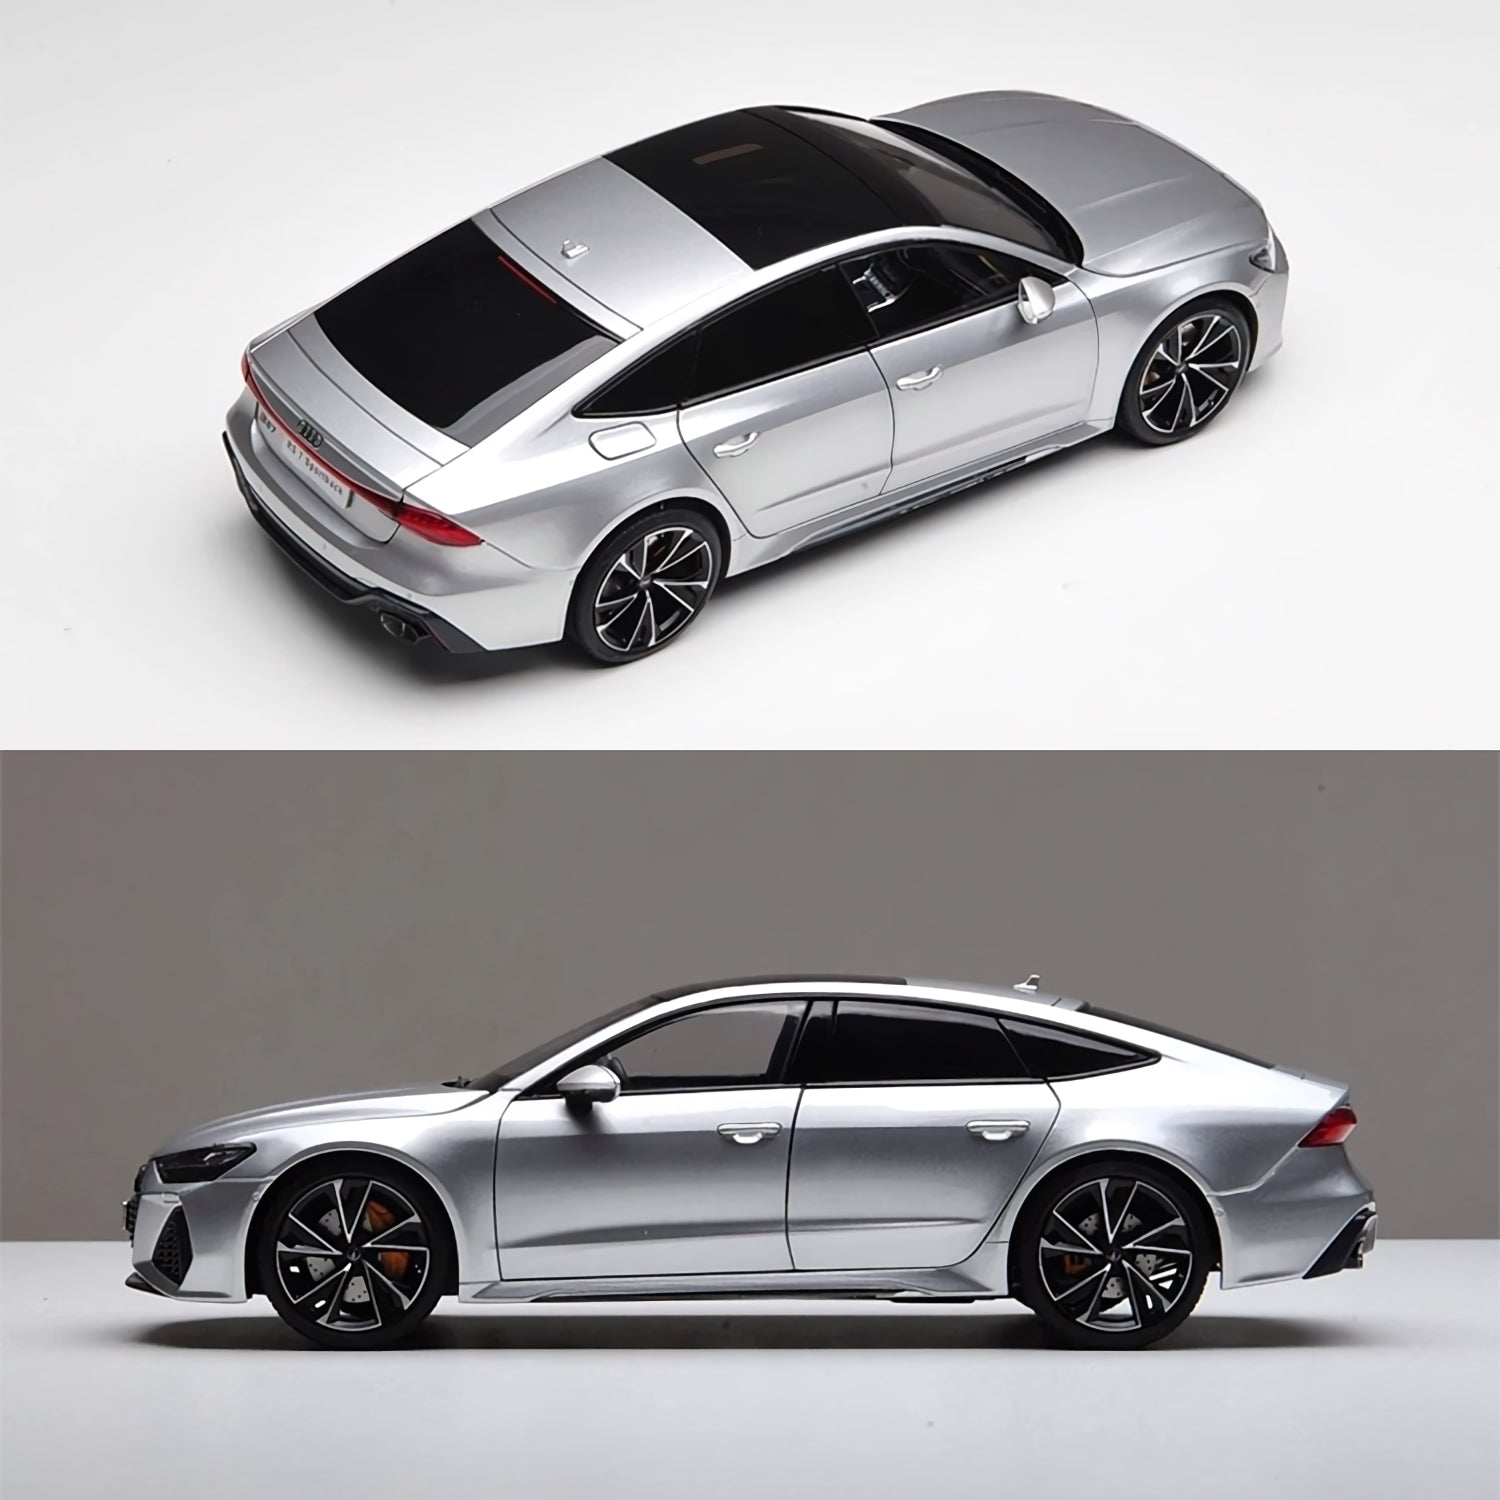 1:18 Scale Audi RS7 Exquisite Die-Cast Model Car - PANSEKtoy